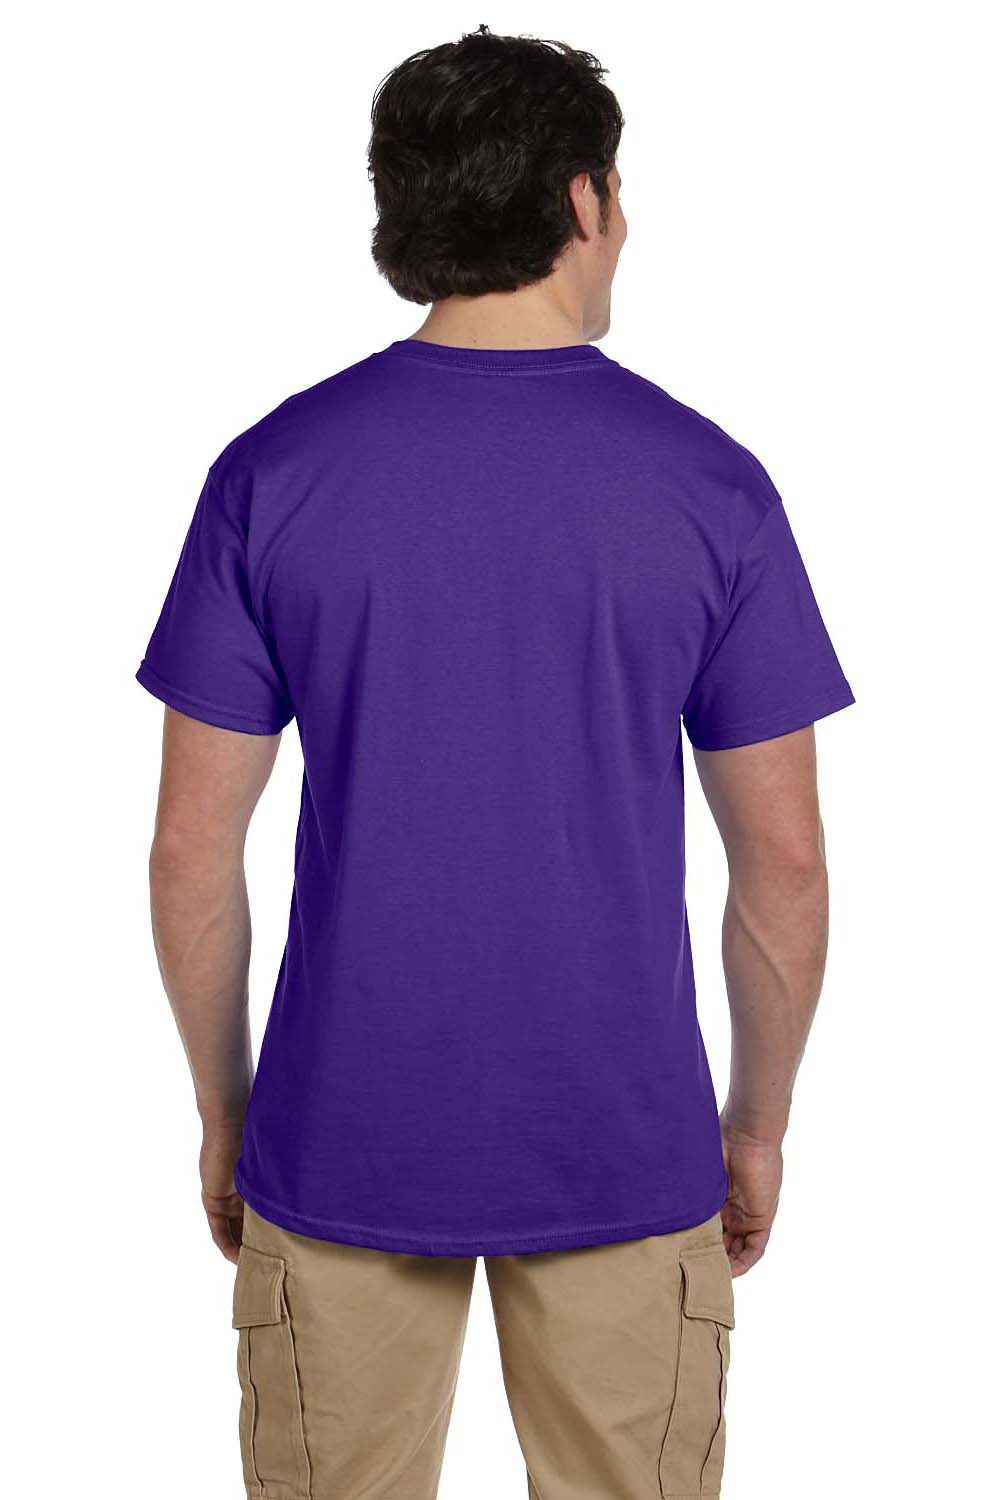 Hanes 5170 Mens EcoSmart Short Sleeve Crewneck T-Shirt Purple Back